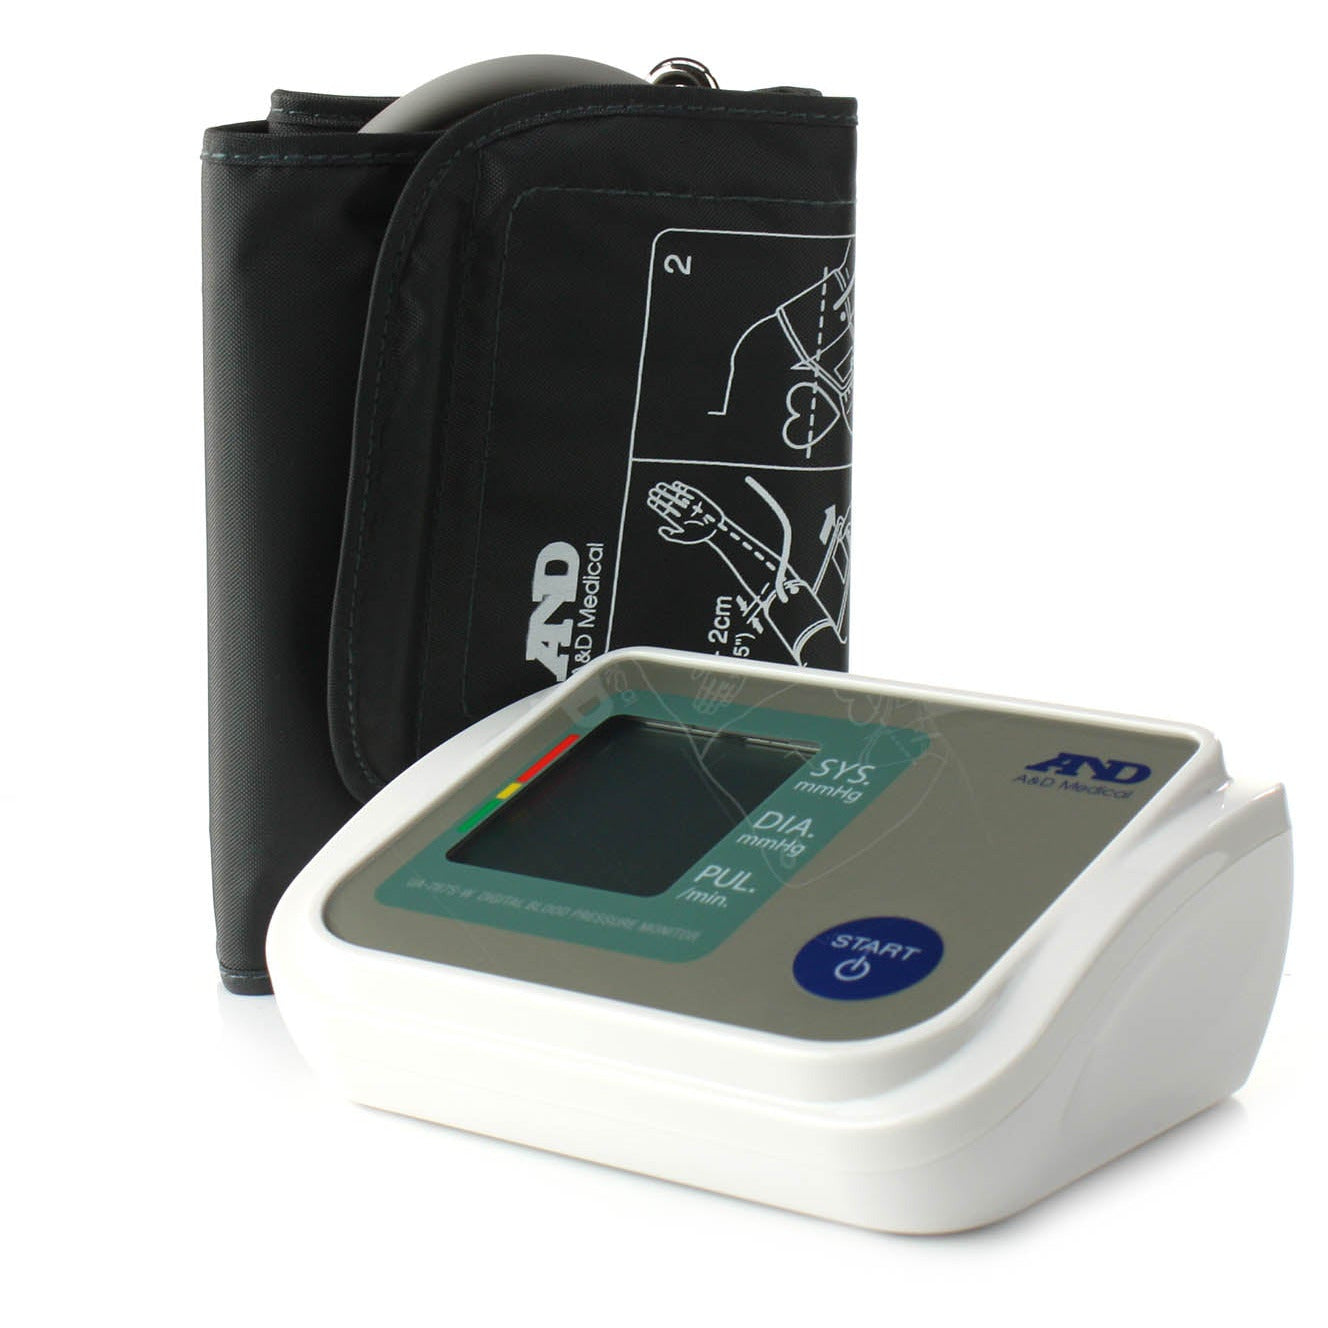 A&D UA-767SW Upper Arm Blood Pressure Monitor